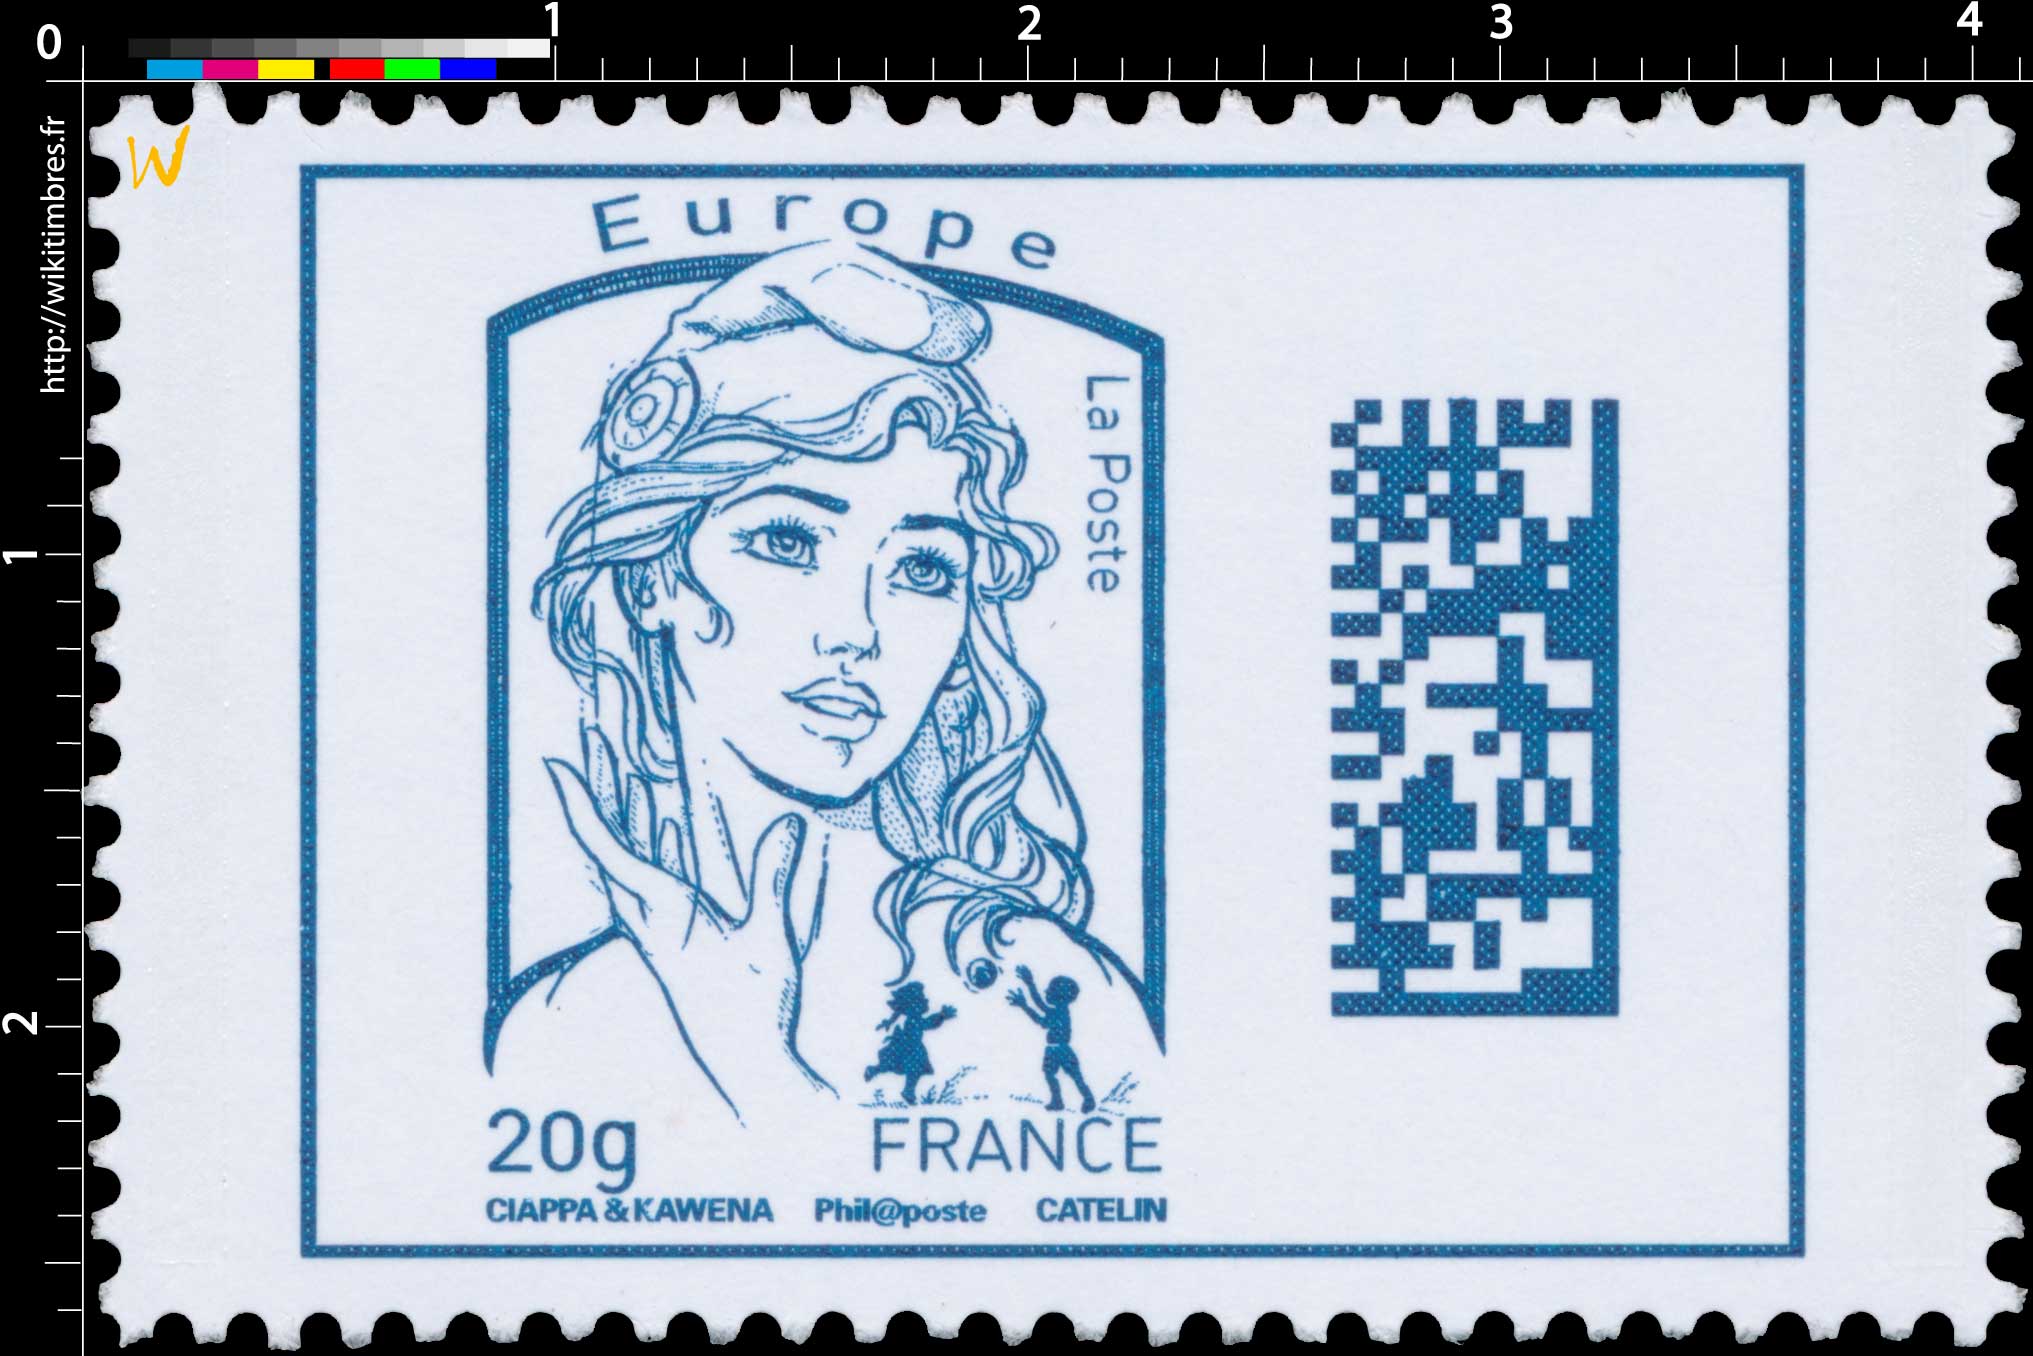 Marianne Europe - Code Datamatrix 